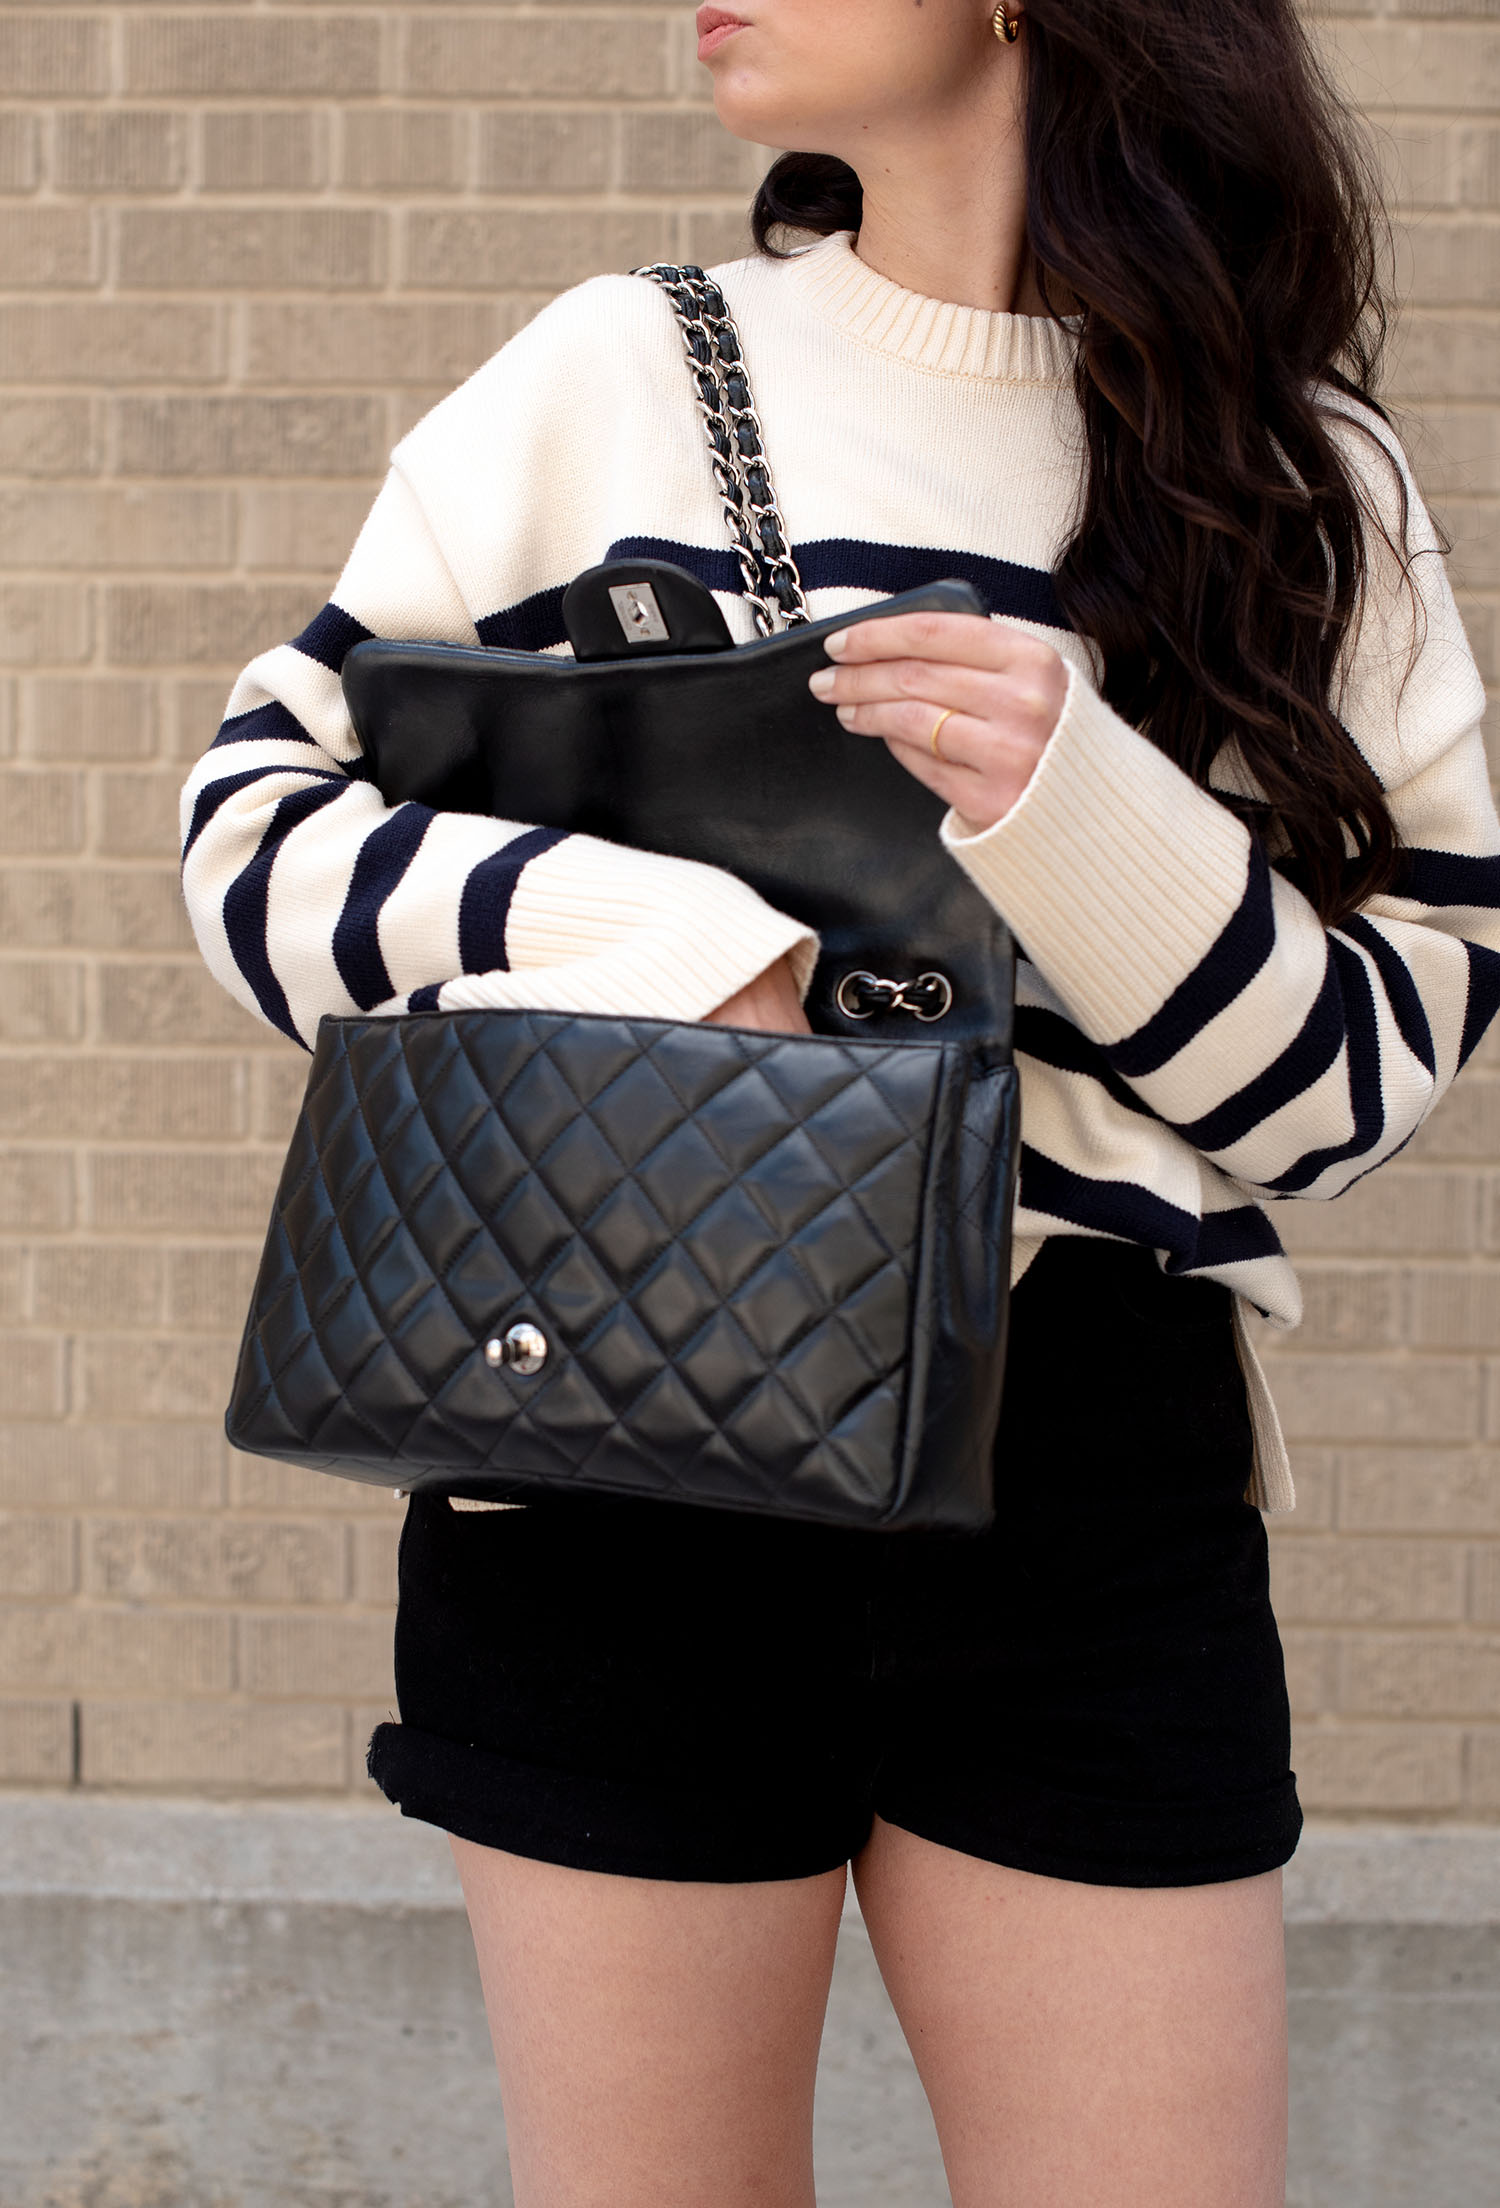 Coco & Vera - Chanel jumbo quilted handbag, Zara striped sweater, Zara black denim shorts